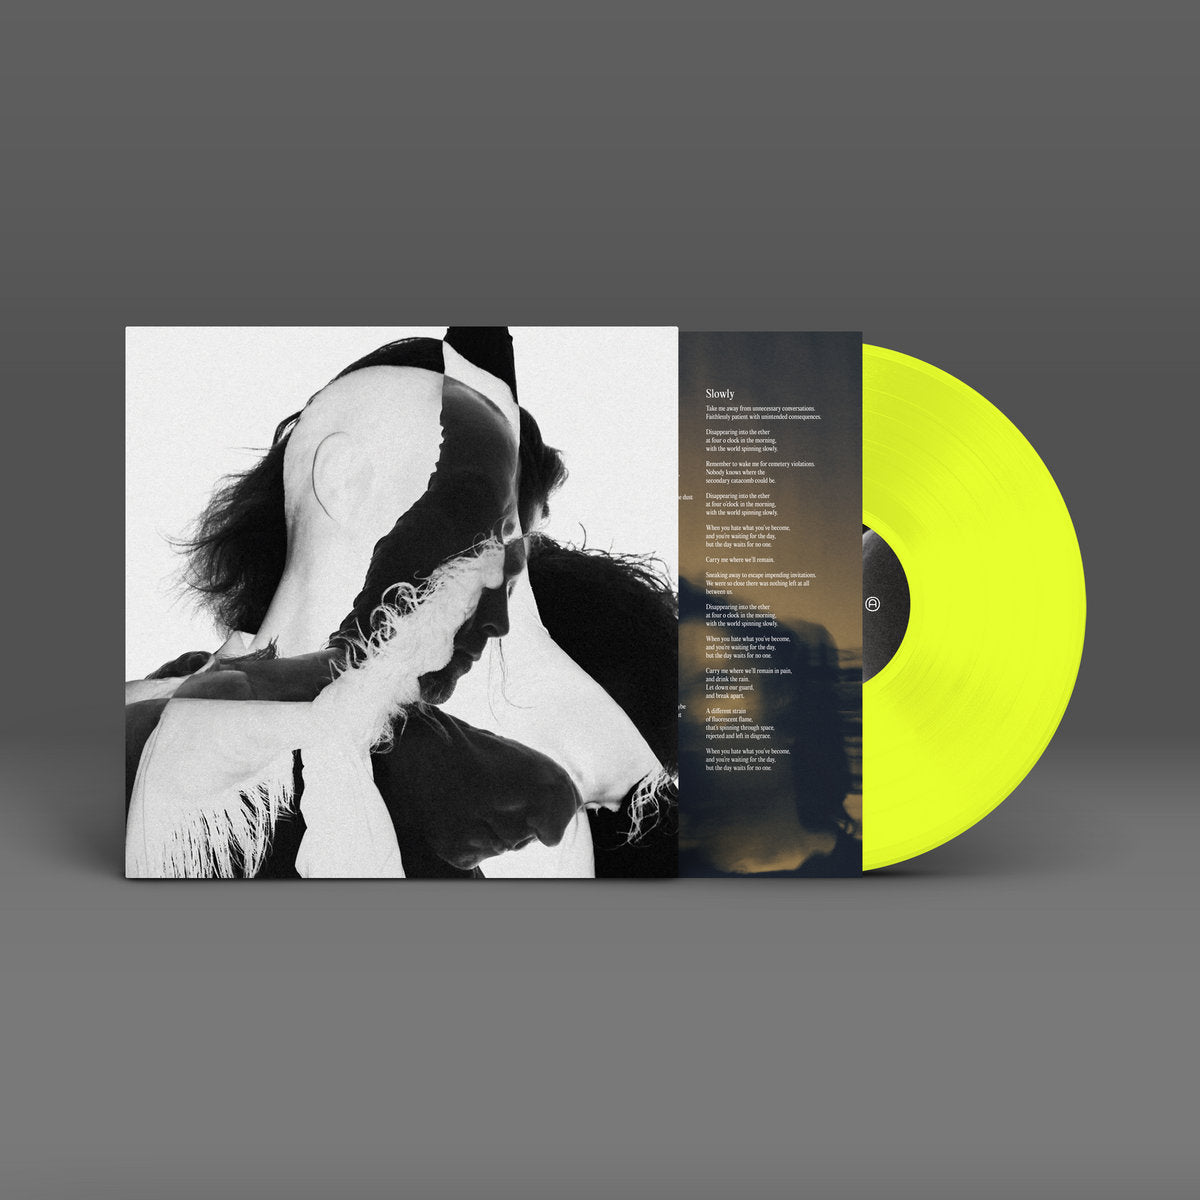 Preoccupations - Arrangements (Limited Edition on Chartruese Vinyl)